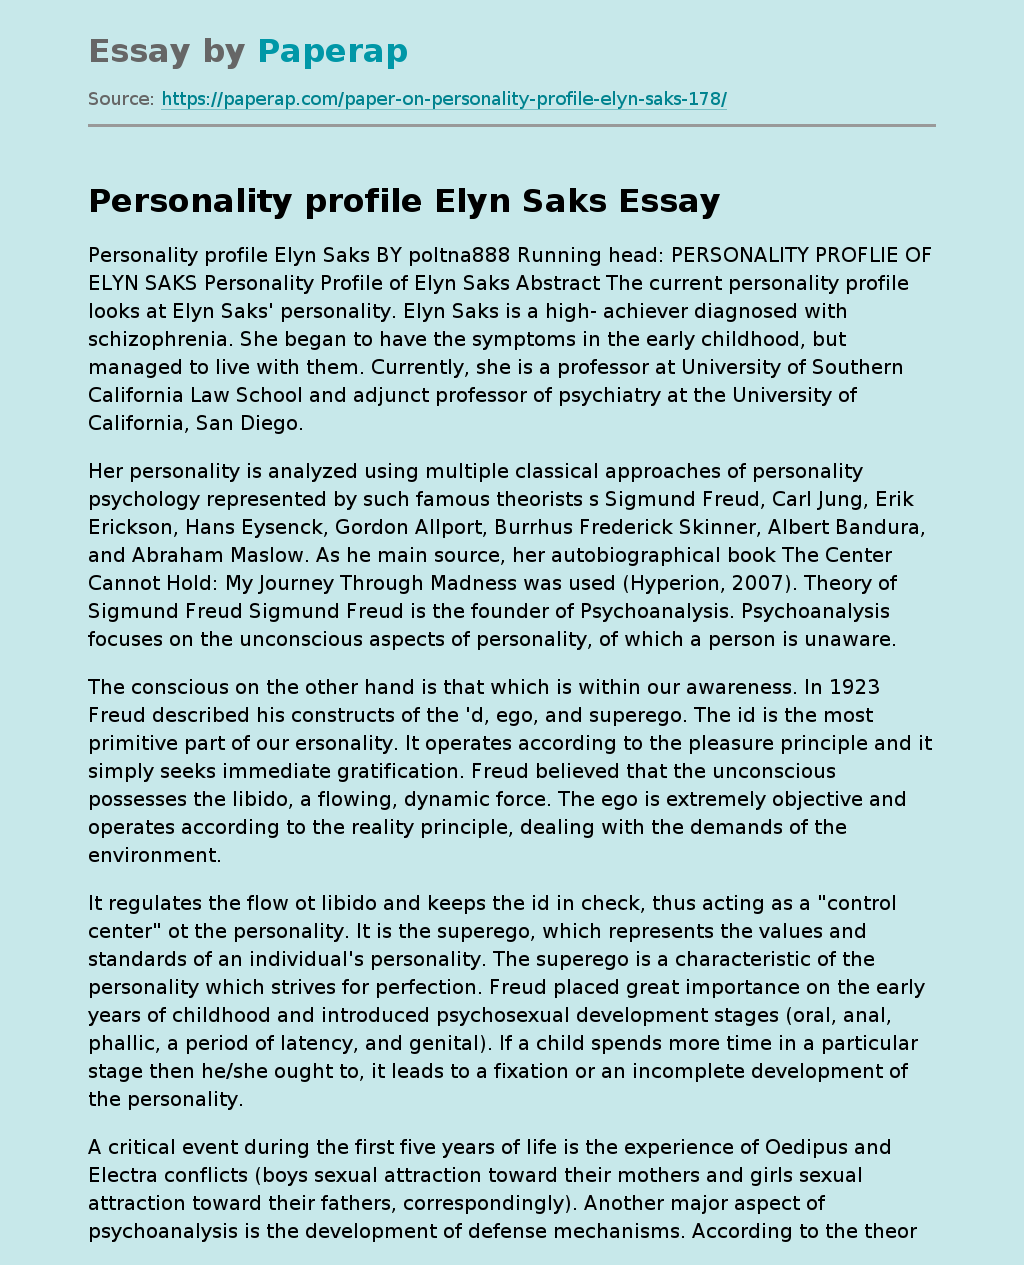 Personality profile Elyn Saks